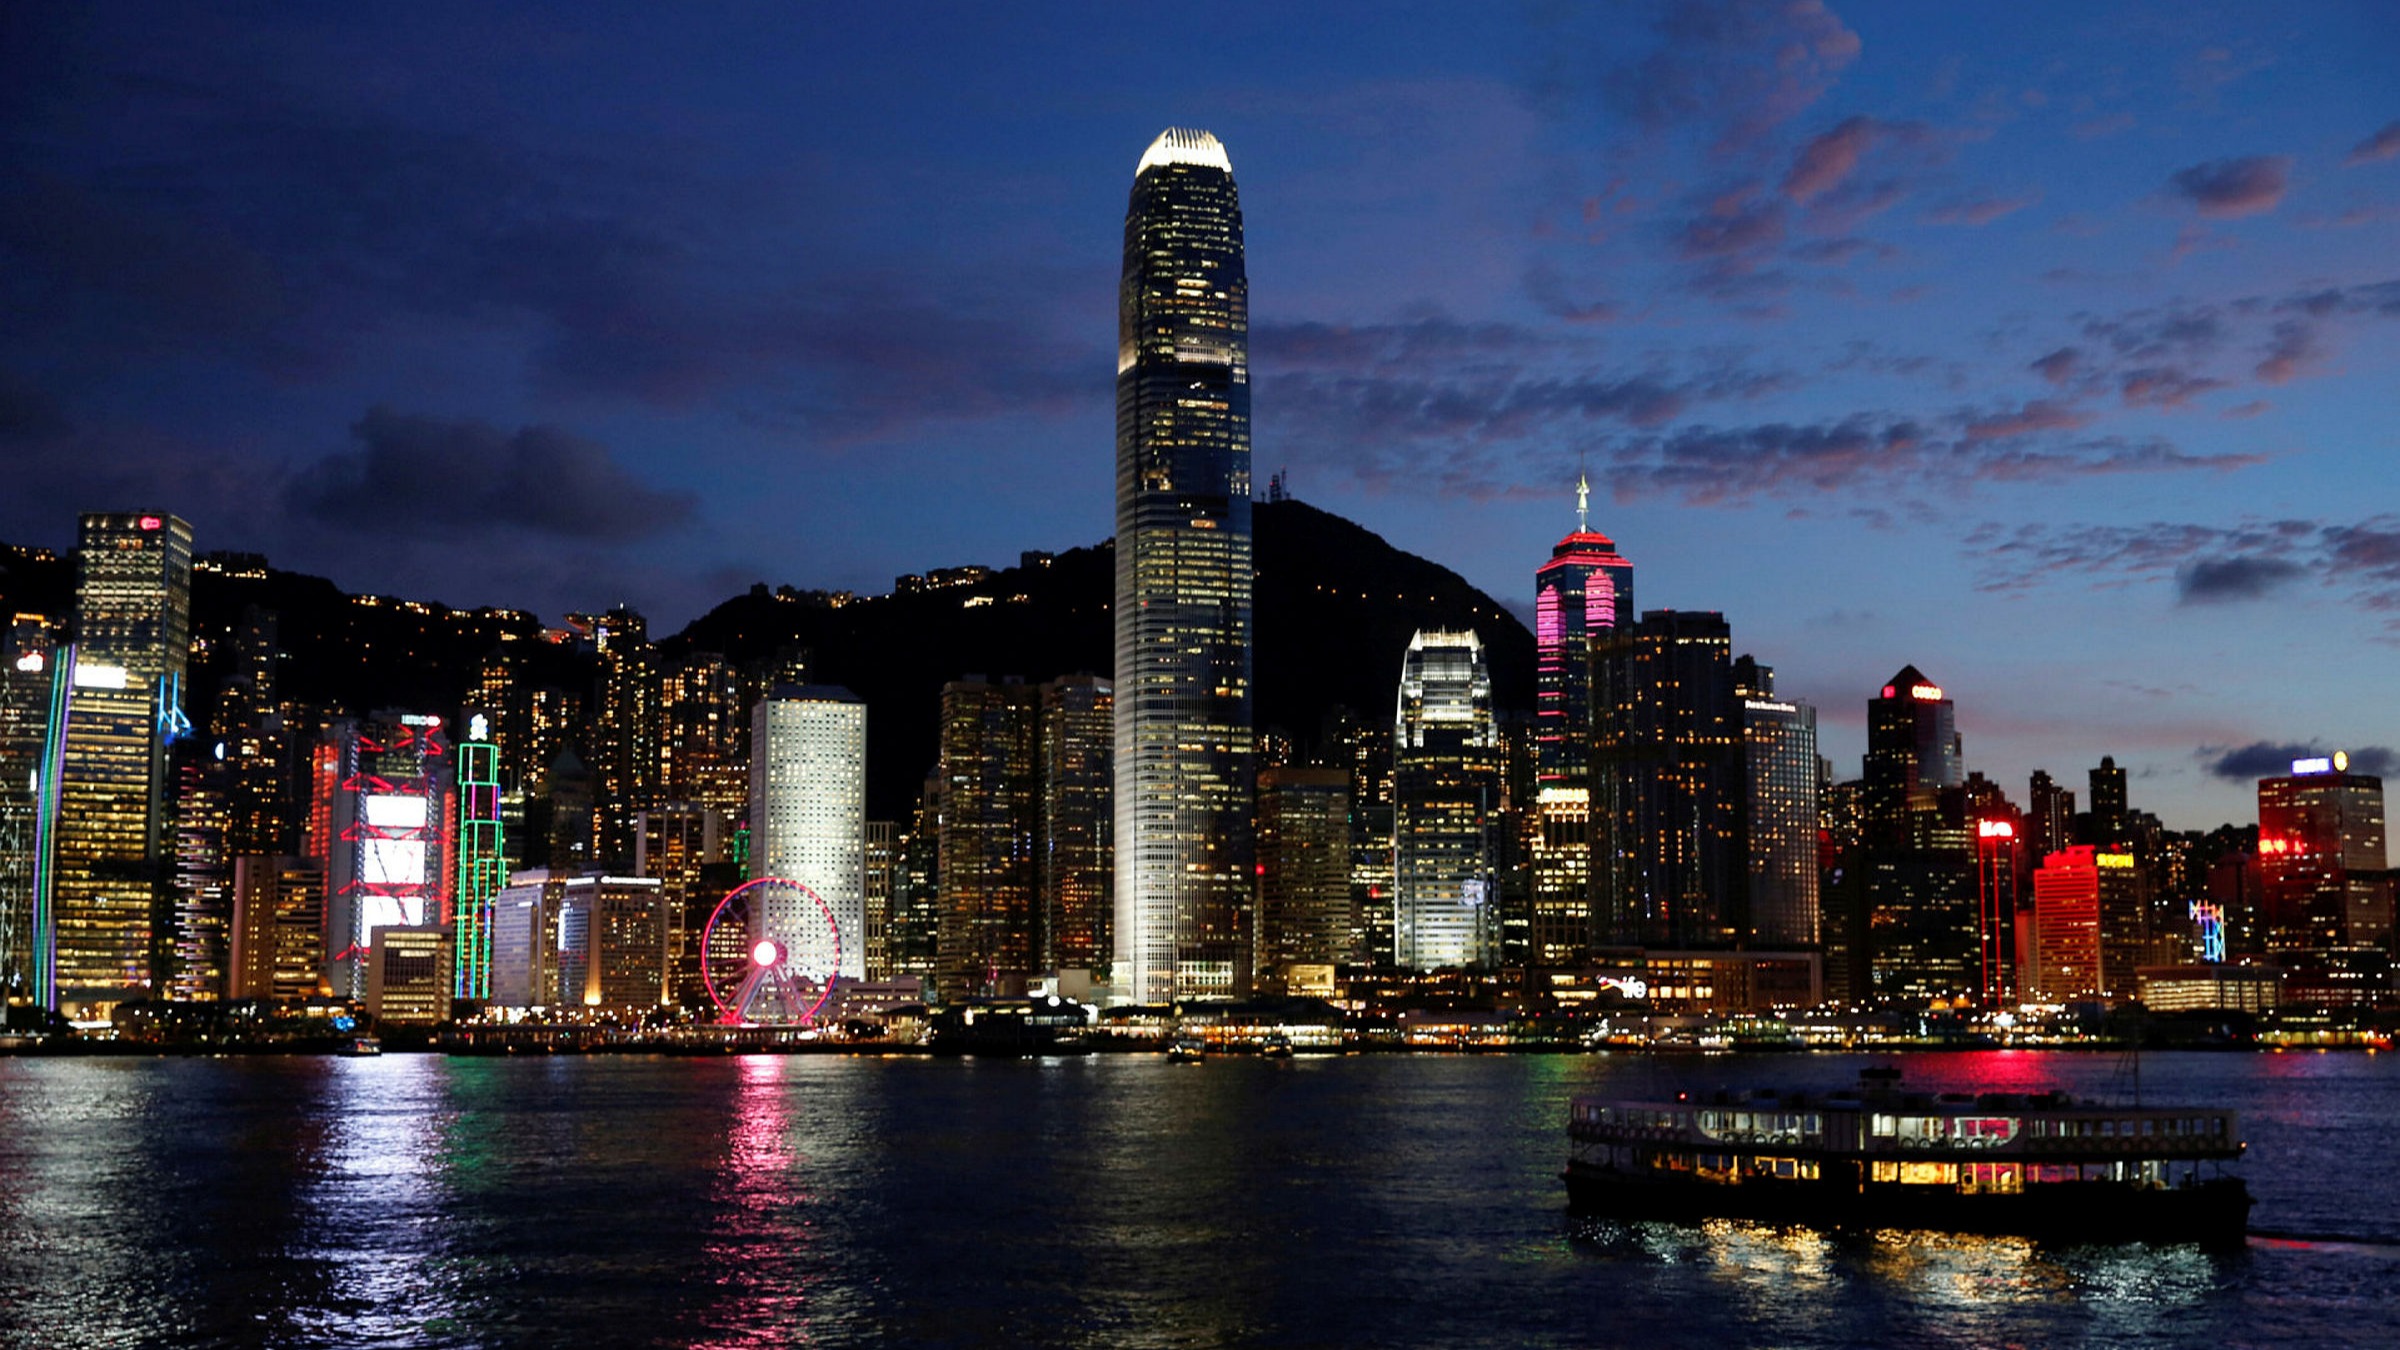 hong kong tourism board project chinese cruise passenger